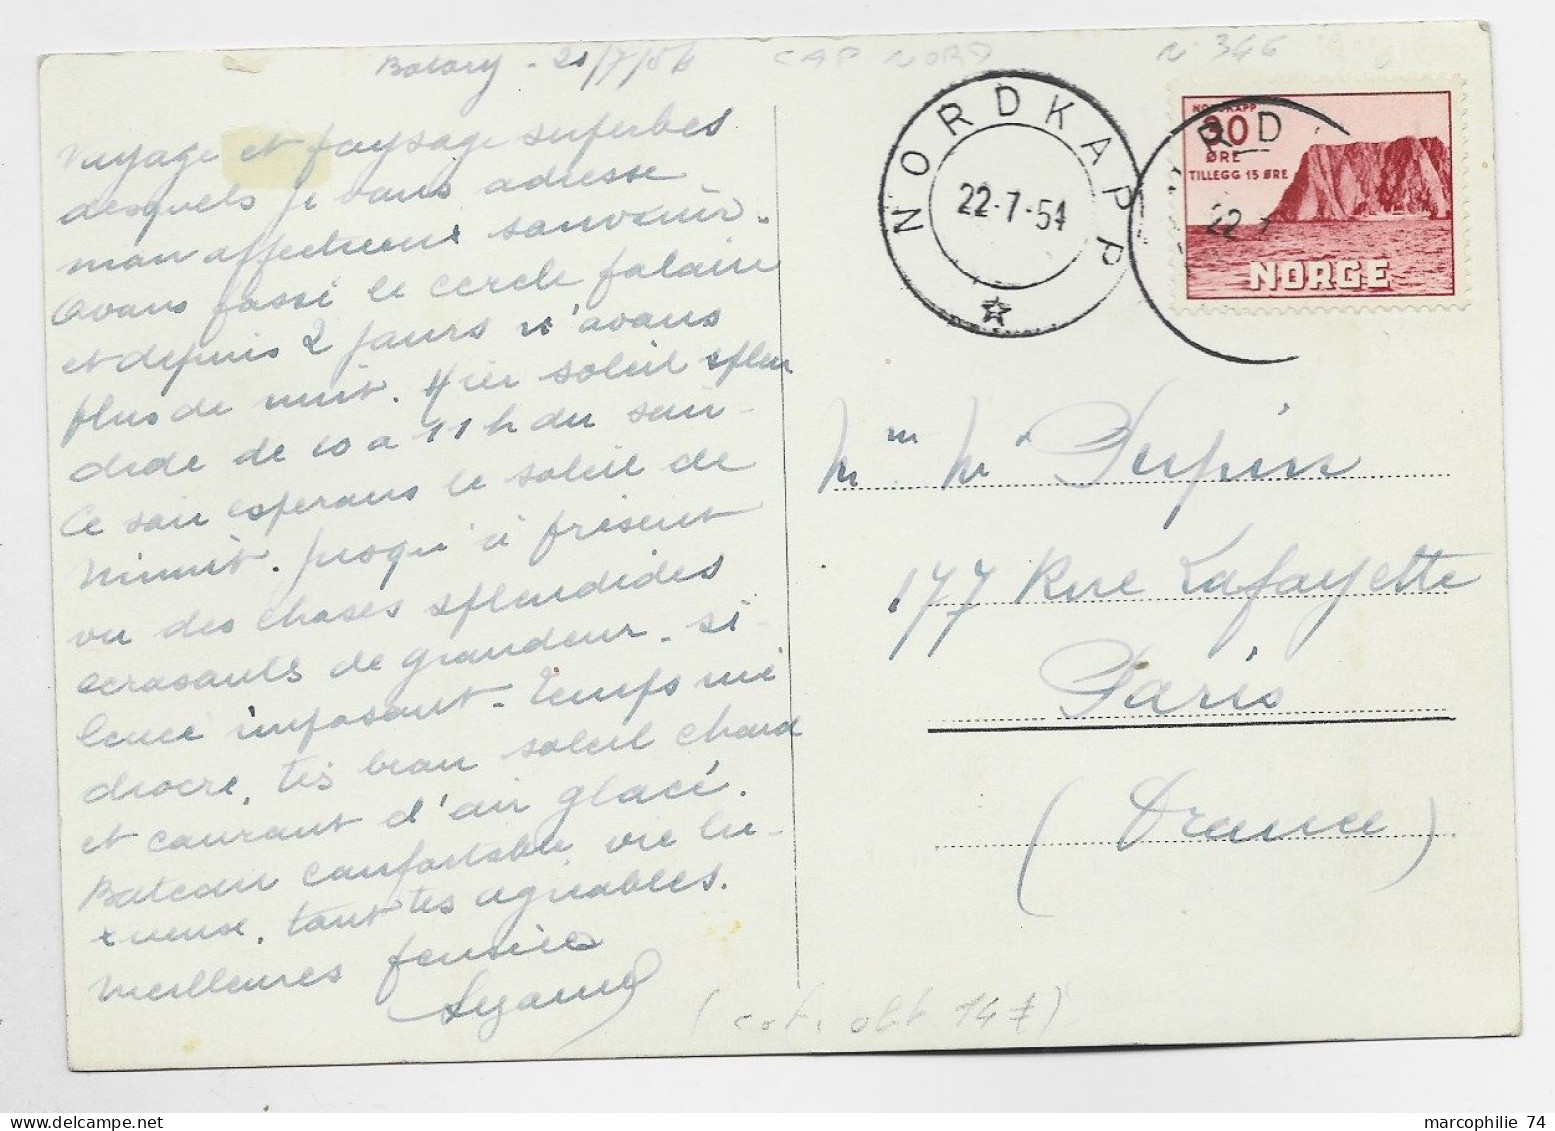 NORGE 30 ORE SOLO CARD CARTE NORDKAPP 22.7.1954 TO FRANCE - Briefe U. Dokumente